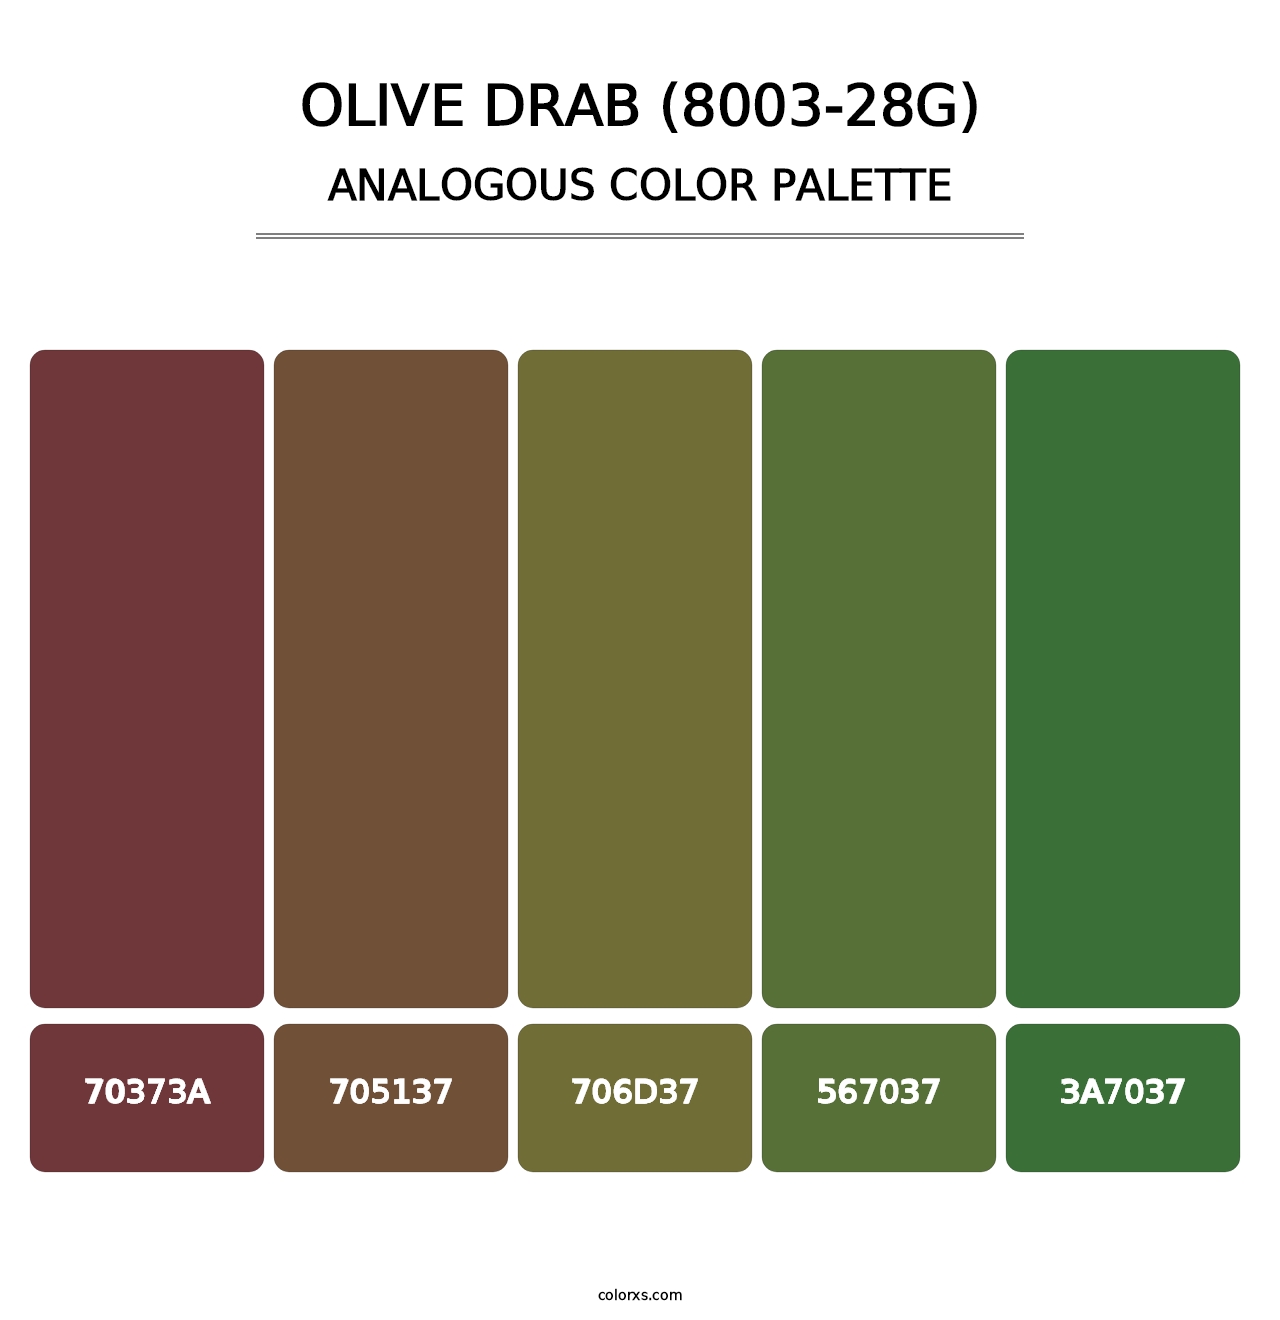 Olive Drab (8003-28G) - Analogous Color Palette